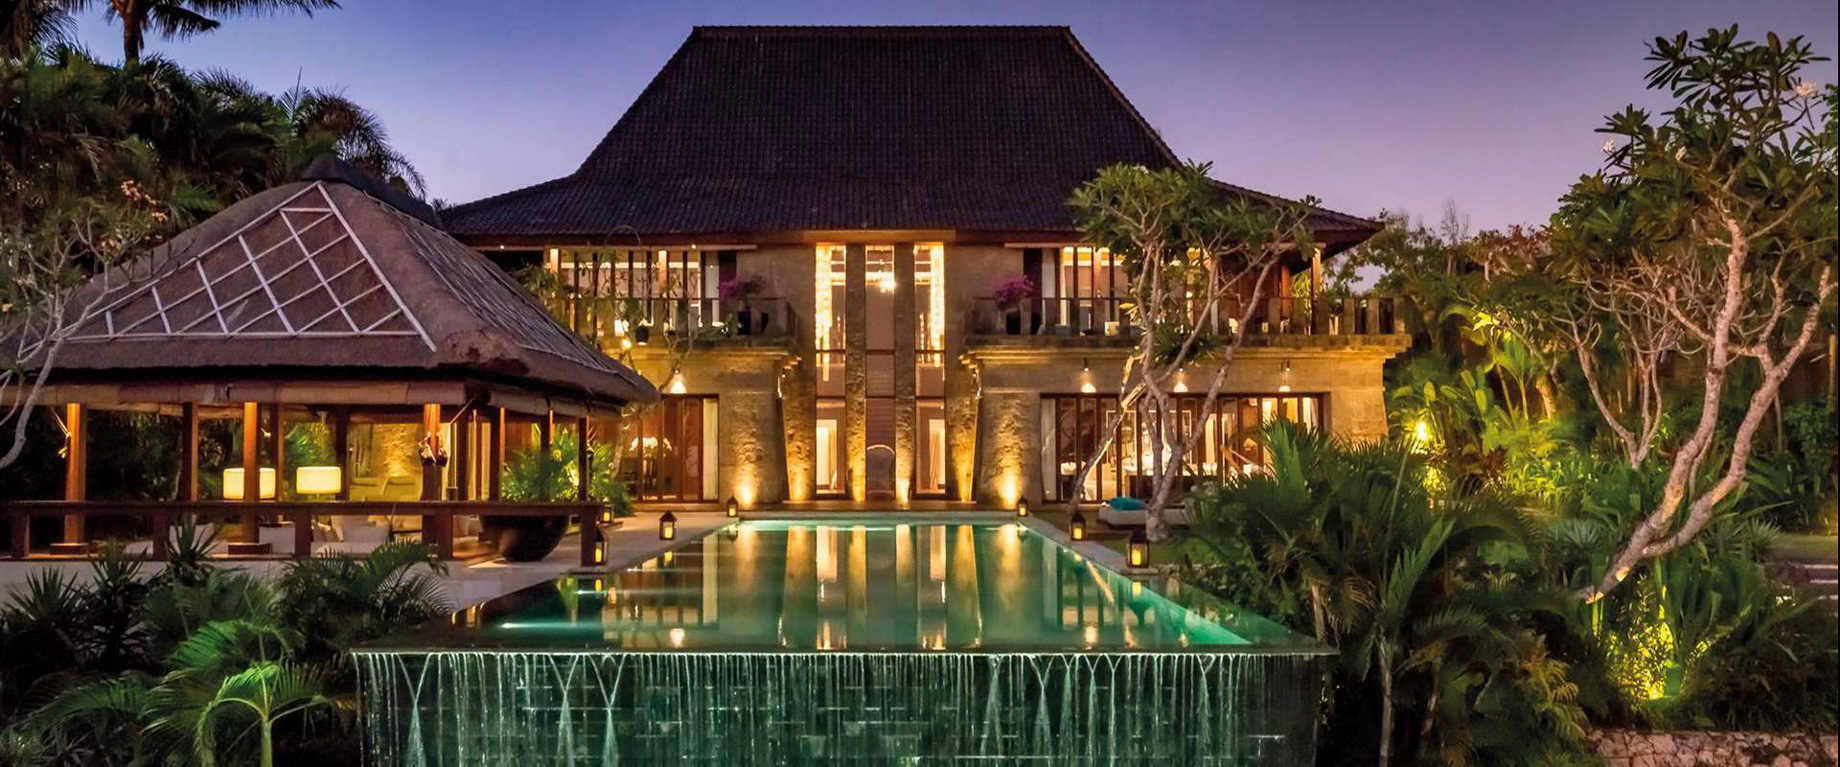 Bvlgari Resort Bali – Uluwatu, Bali, Indonesia – The Bvlgari Villa Exterior Pool Deck Night